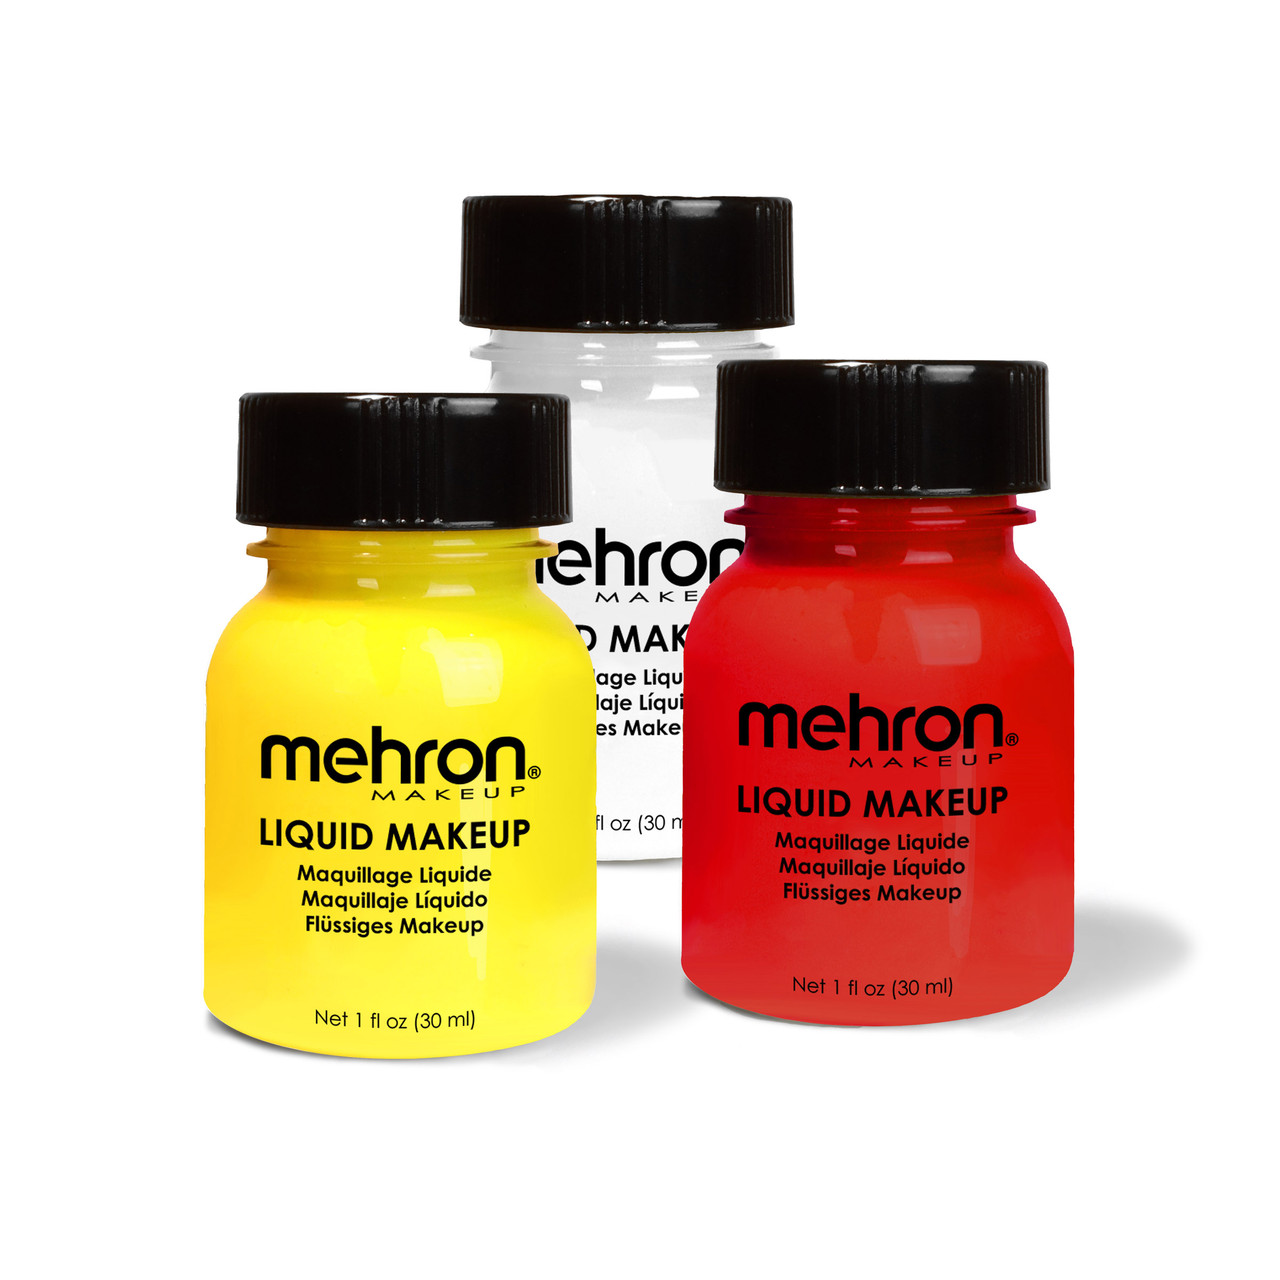 Mehron Makeup Liquid Makeup | Face Paint and Body Paint 4.5 oz (133 ml)  (GREEN)